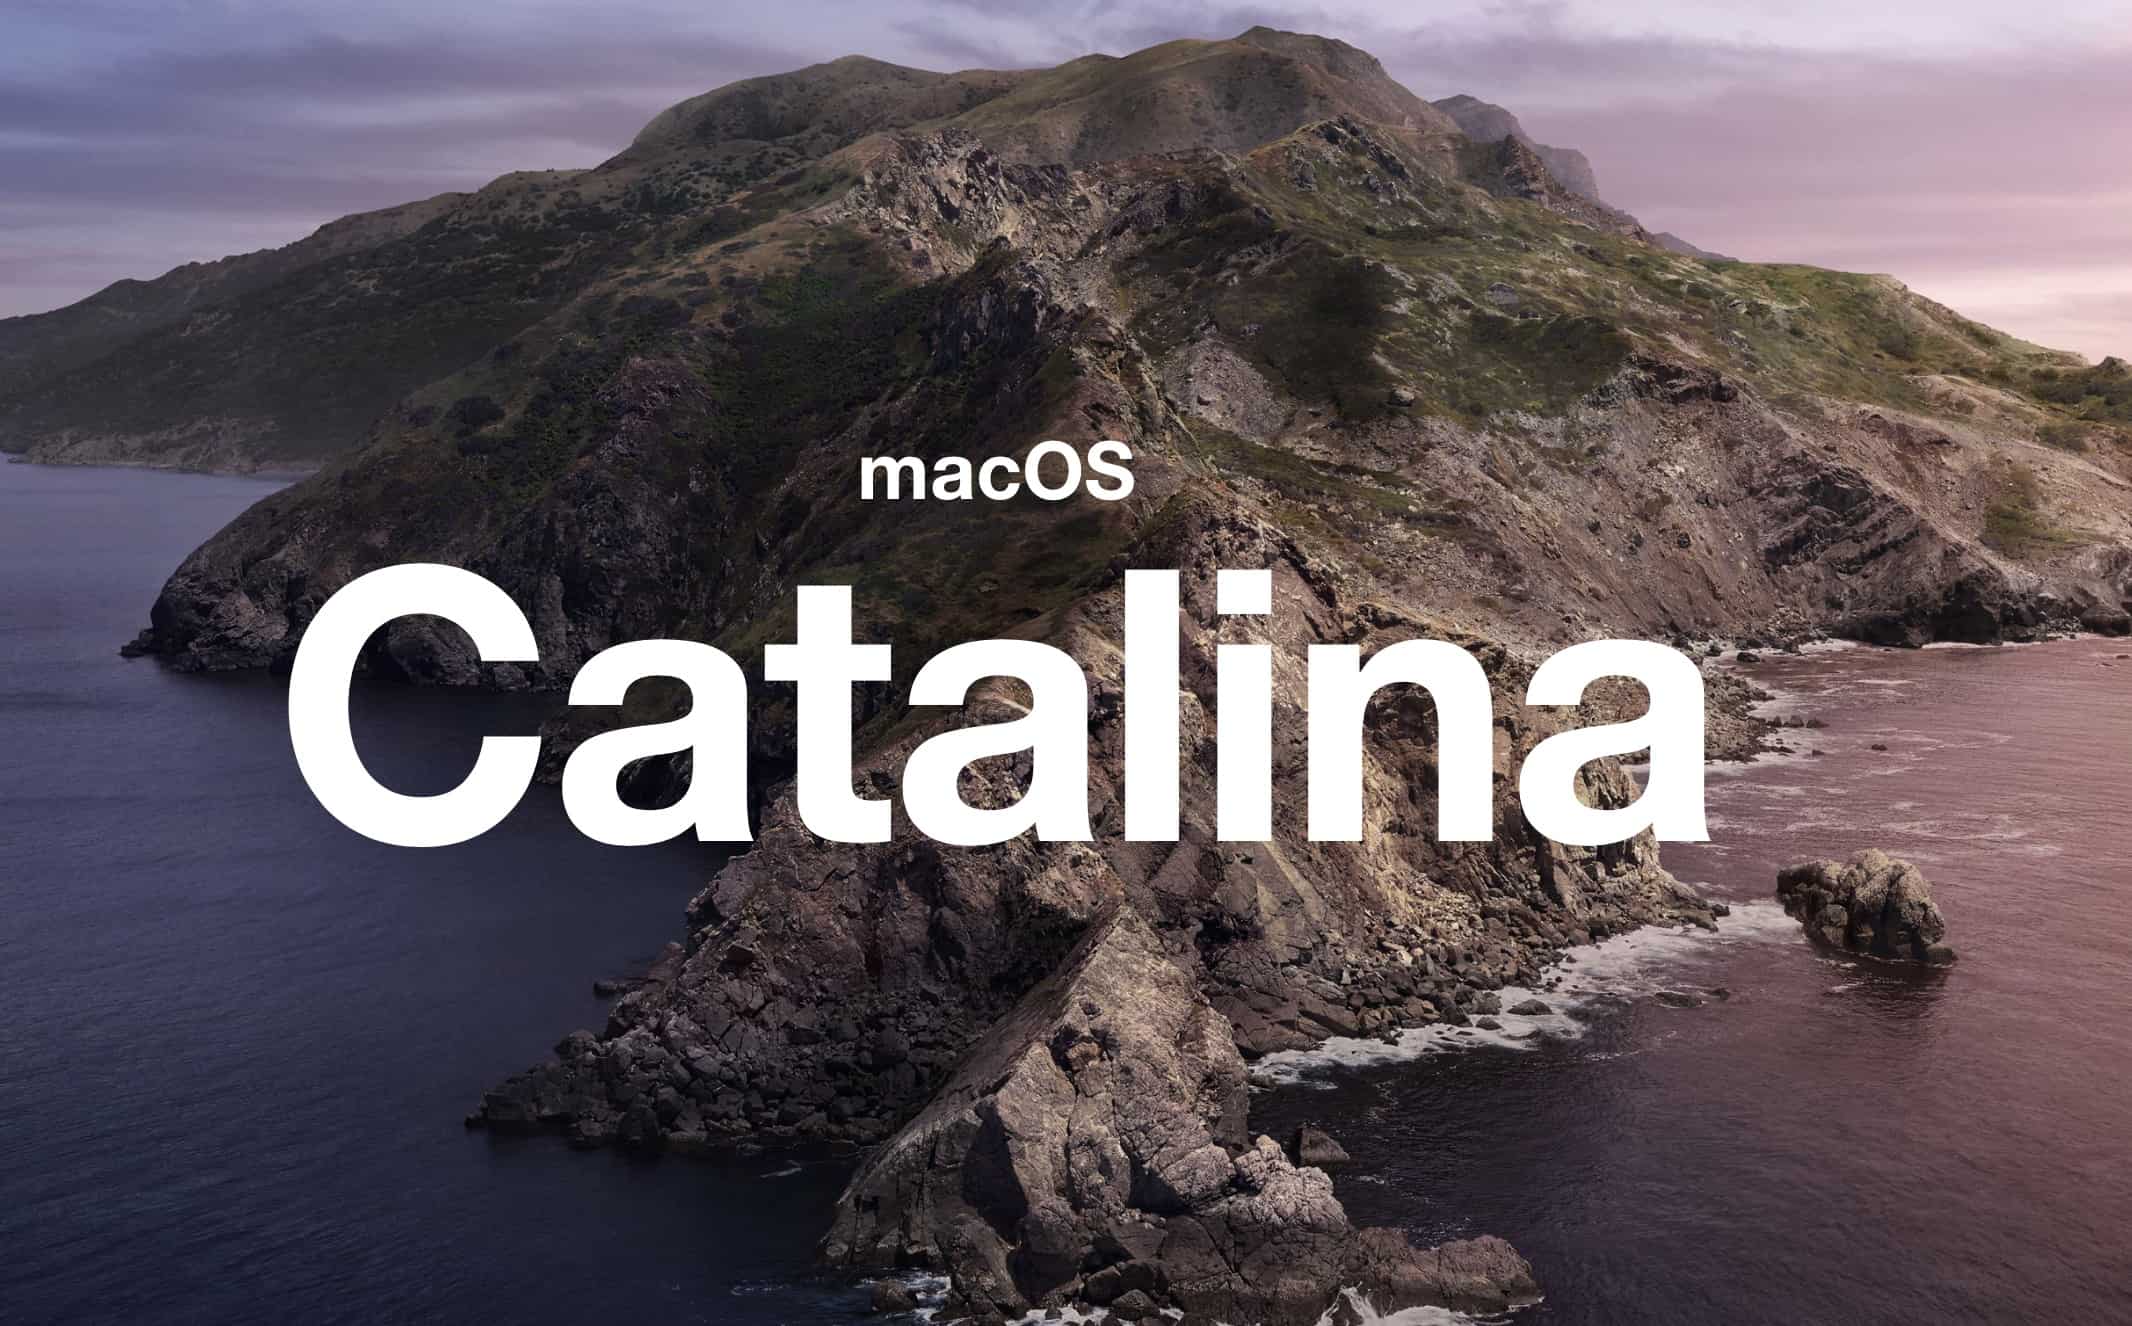 download macos catalina 10.15 vmware image